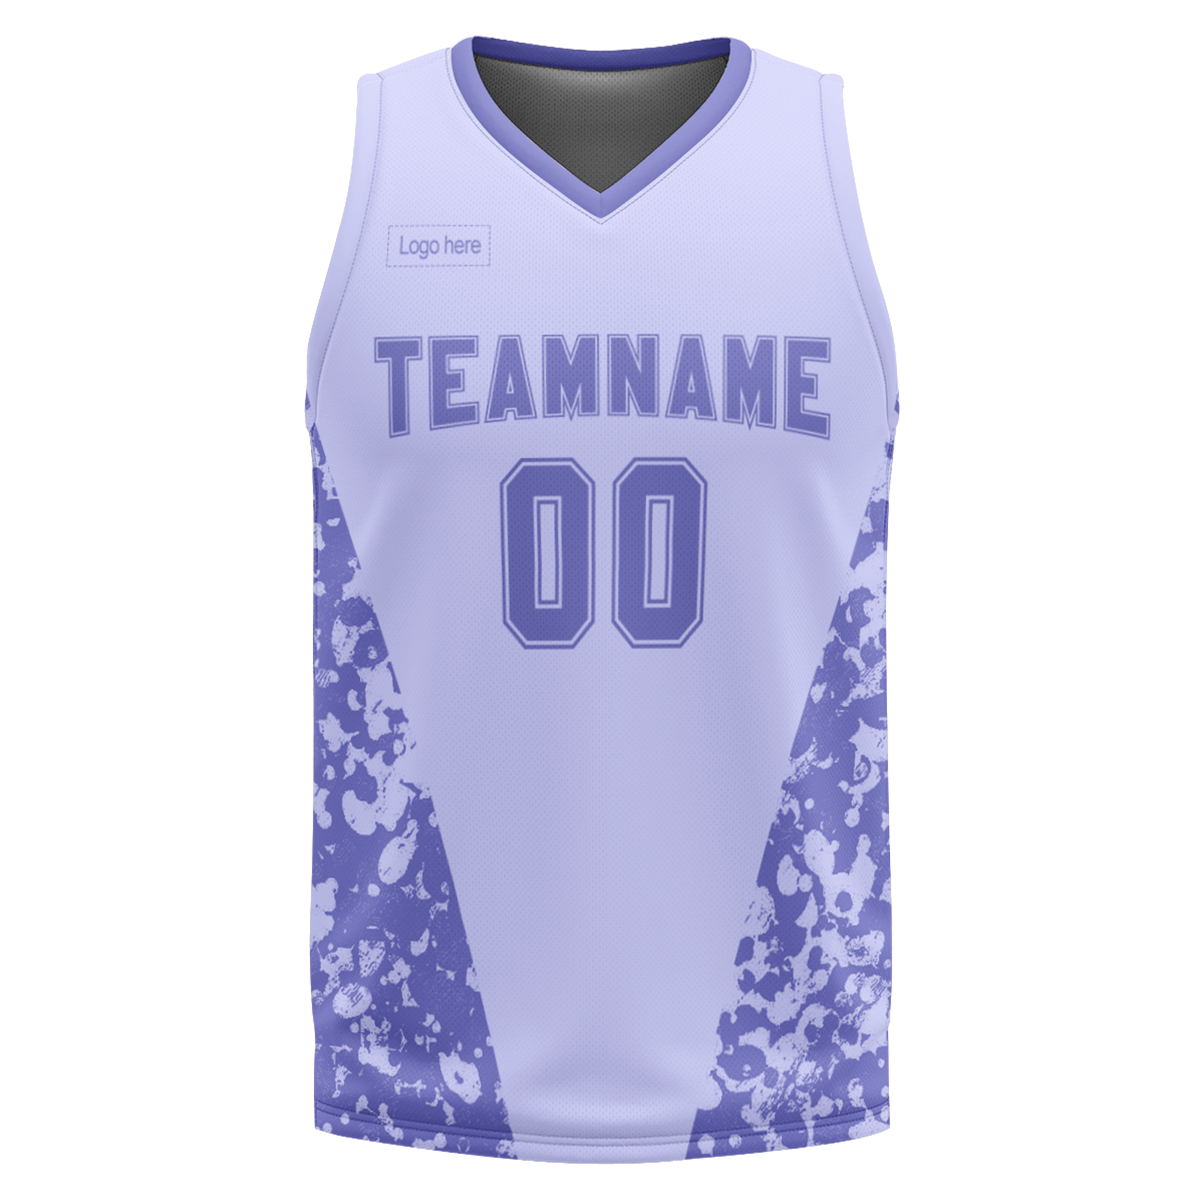 custom-cool-design-basketball-shirts-unisex-sublimation-print-on-demand-basketball-uniforms-at-cj-pod-4